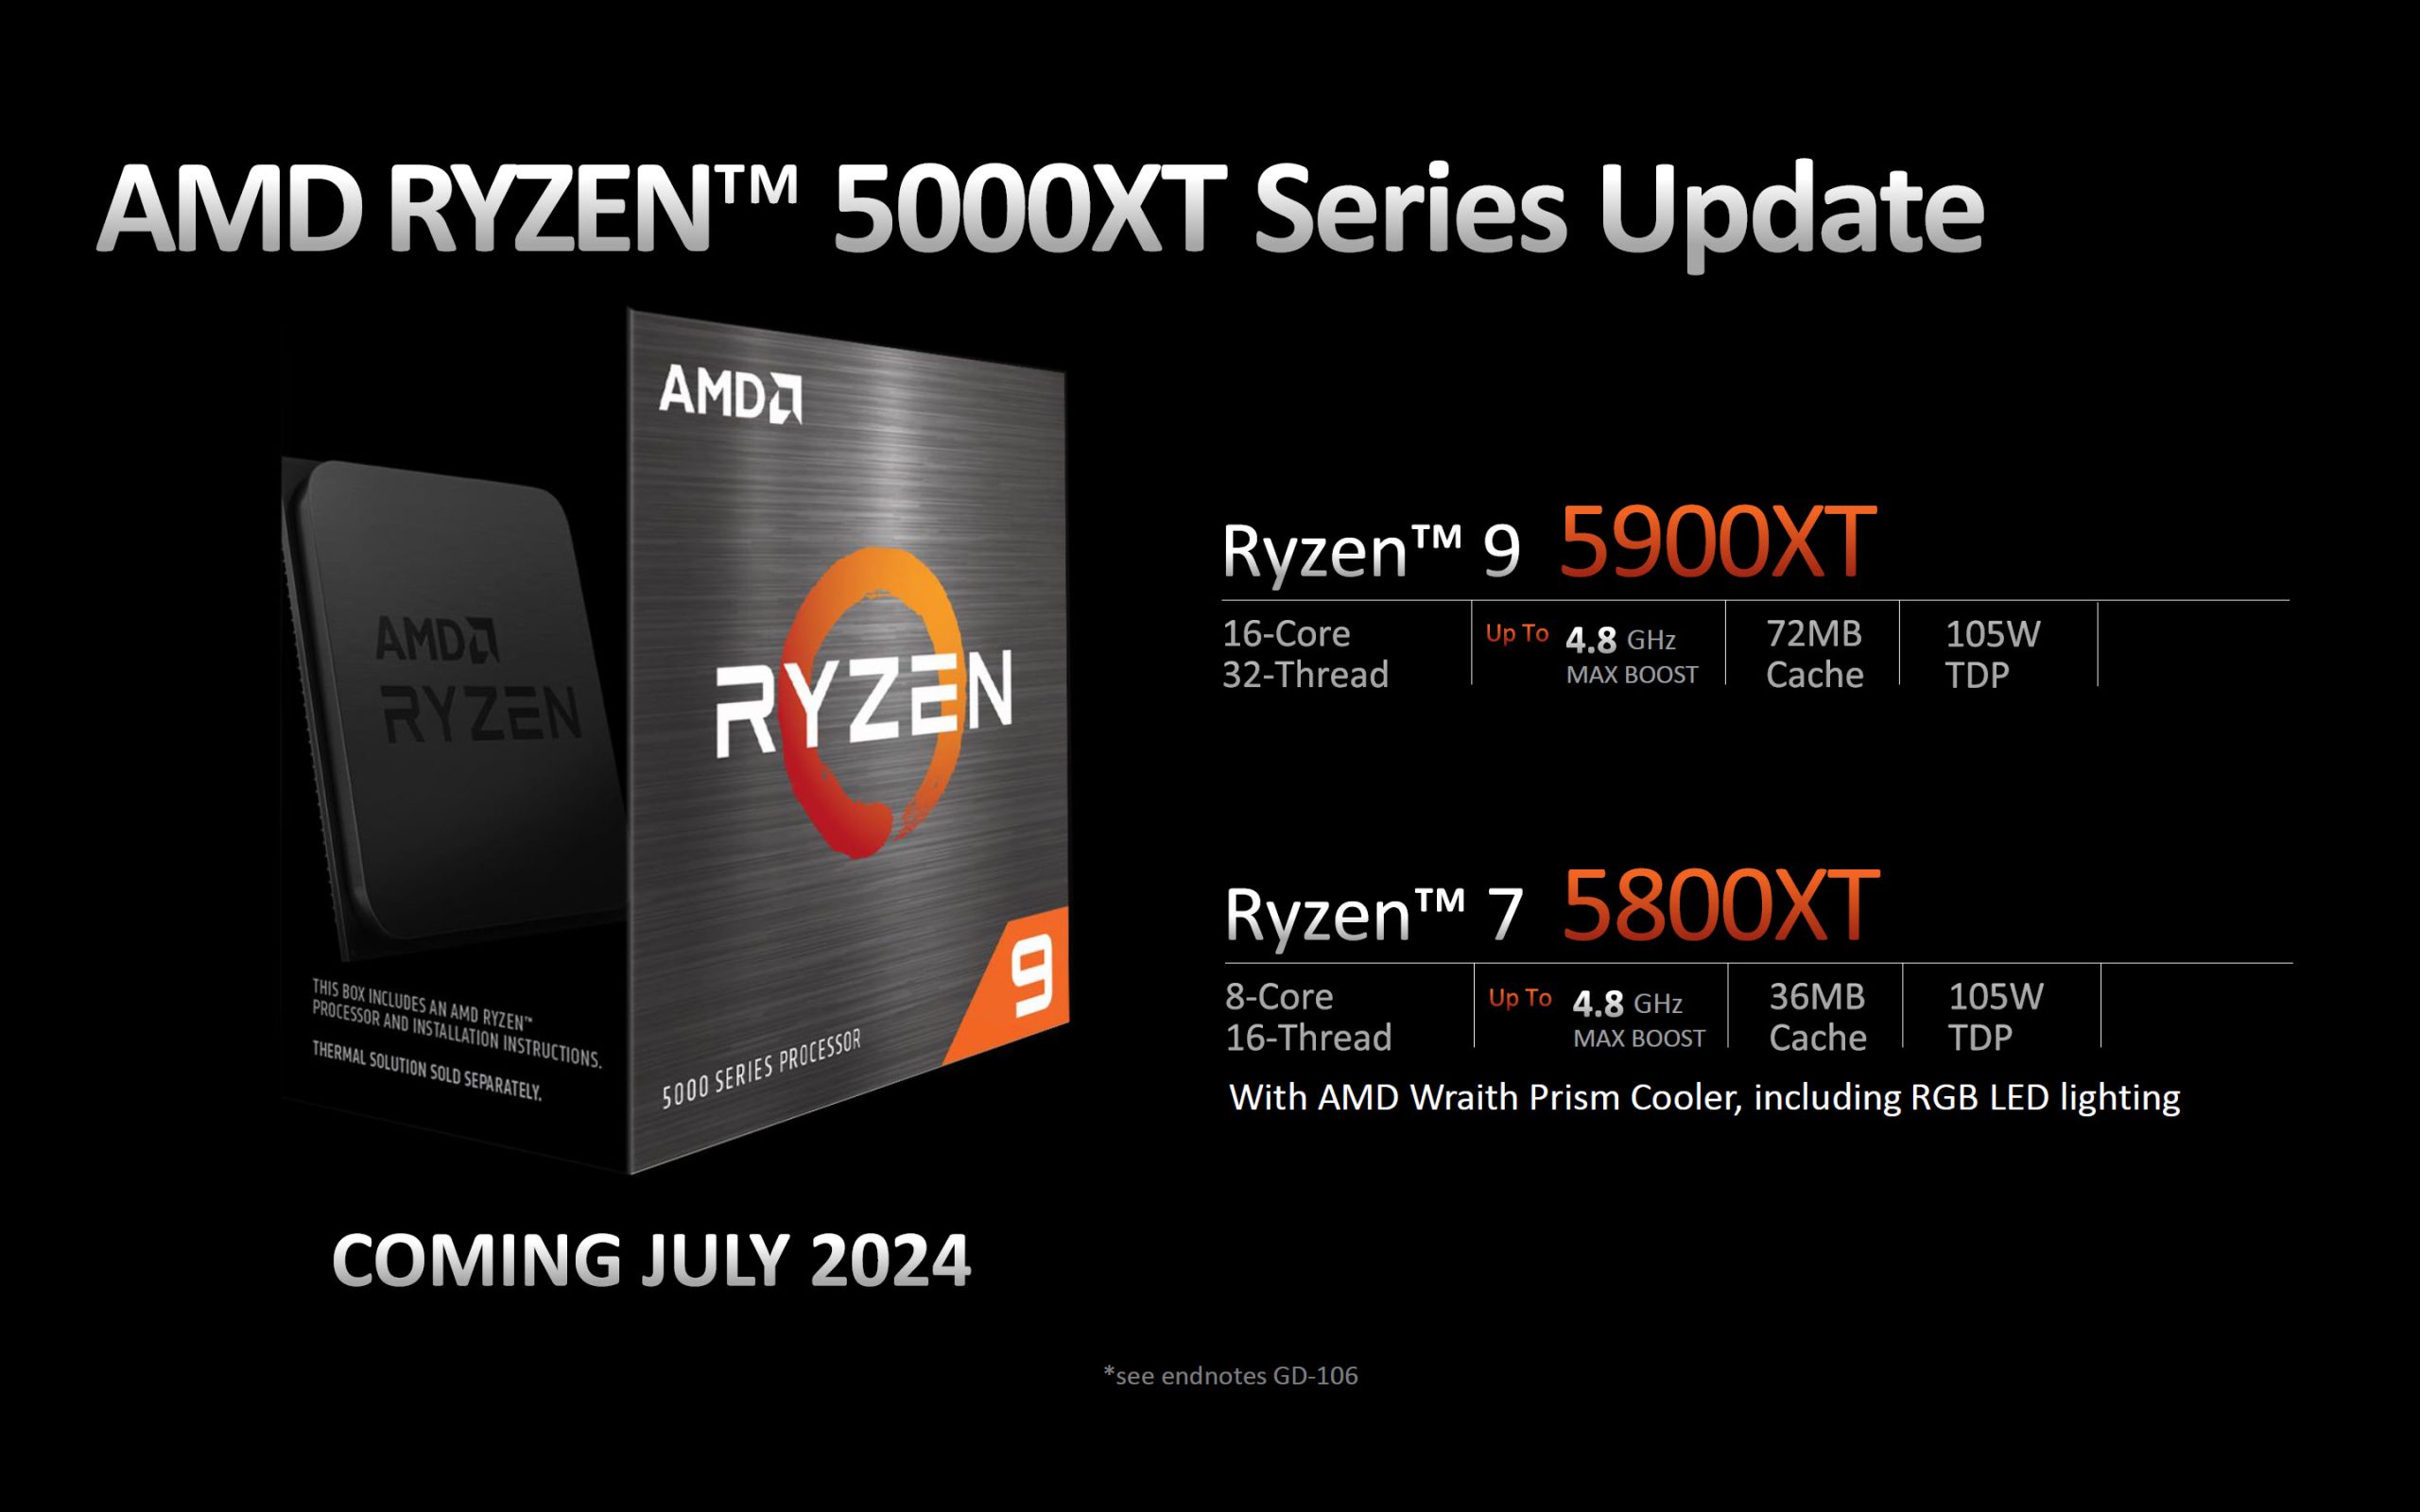 AMD-Ryzen-5000XT-AM4-Zen-3-Desktop-CPUs.jpg